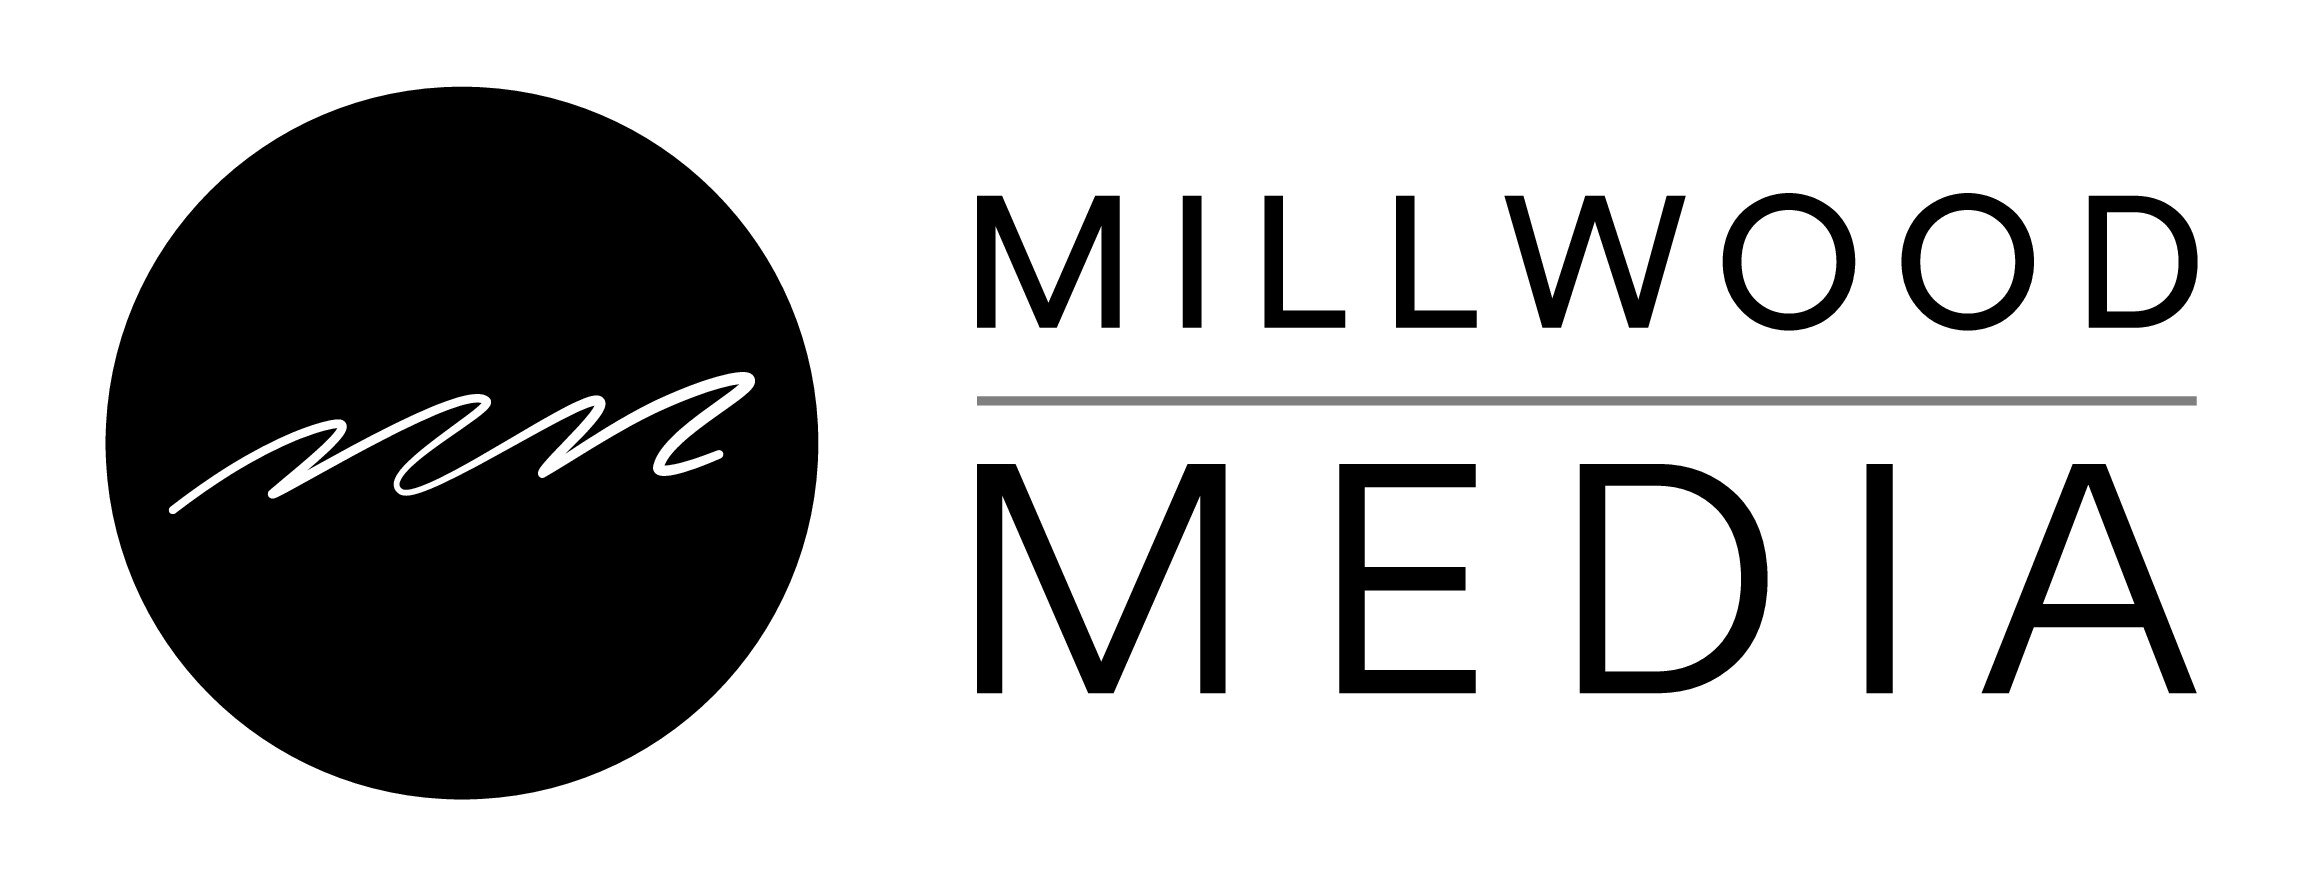 Millwood Media - PRINT - EPS.jpg